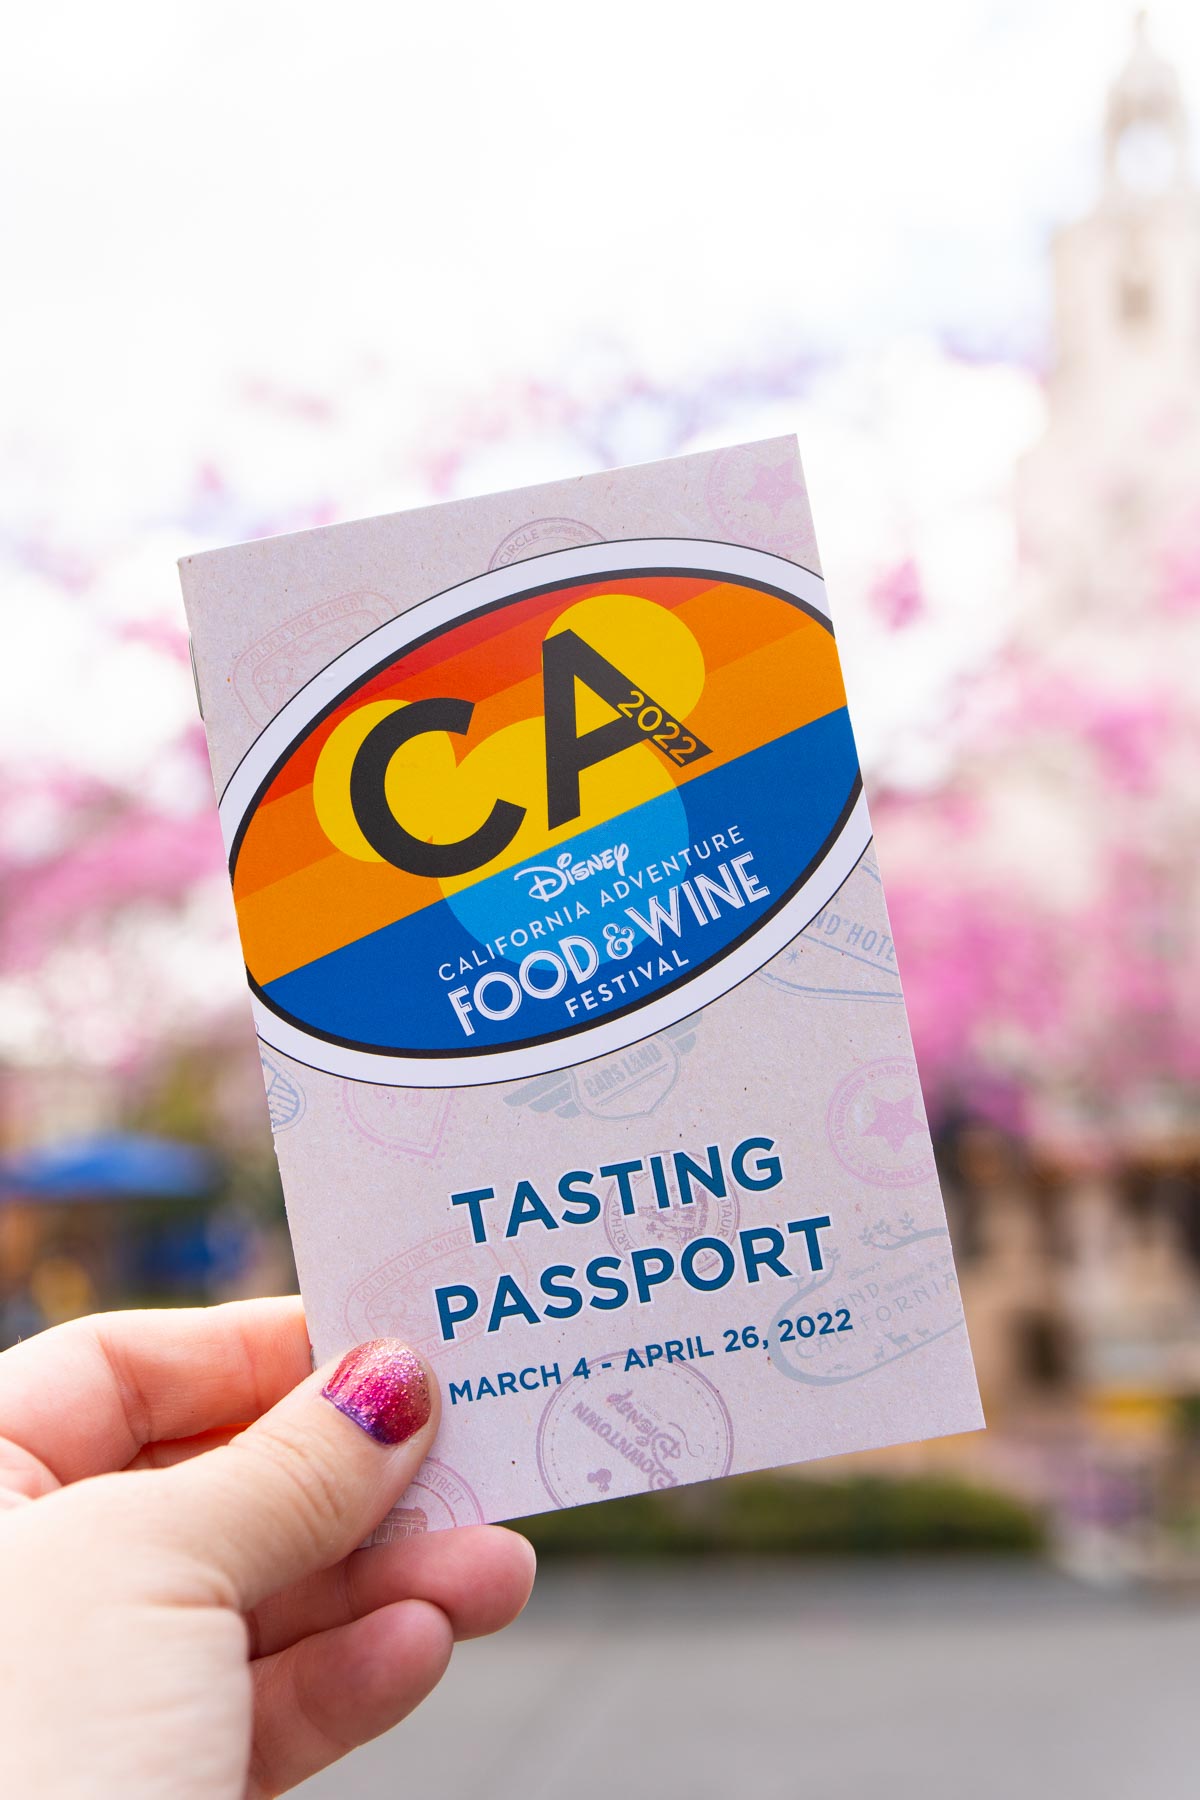 Disneyland Food and Wine Festival 2022 tasting passport